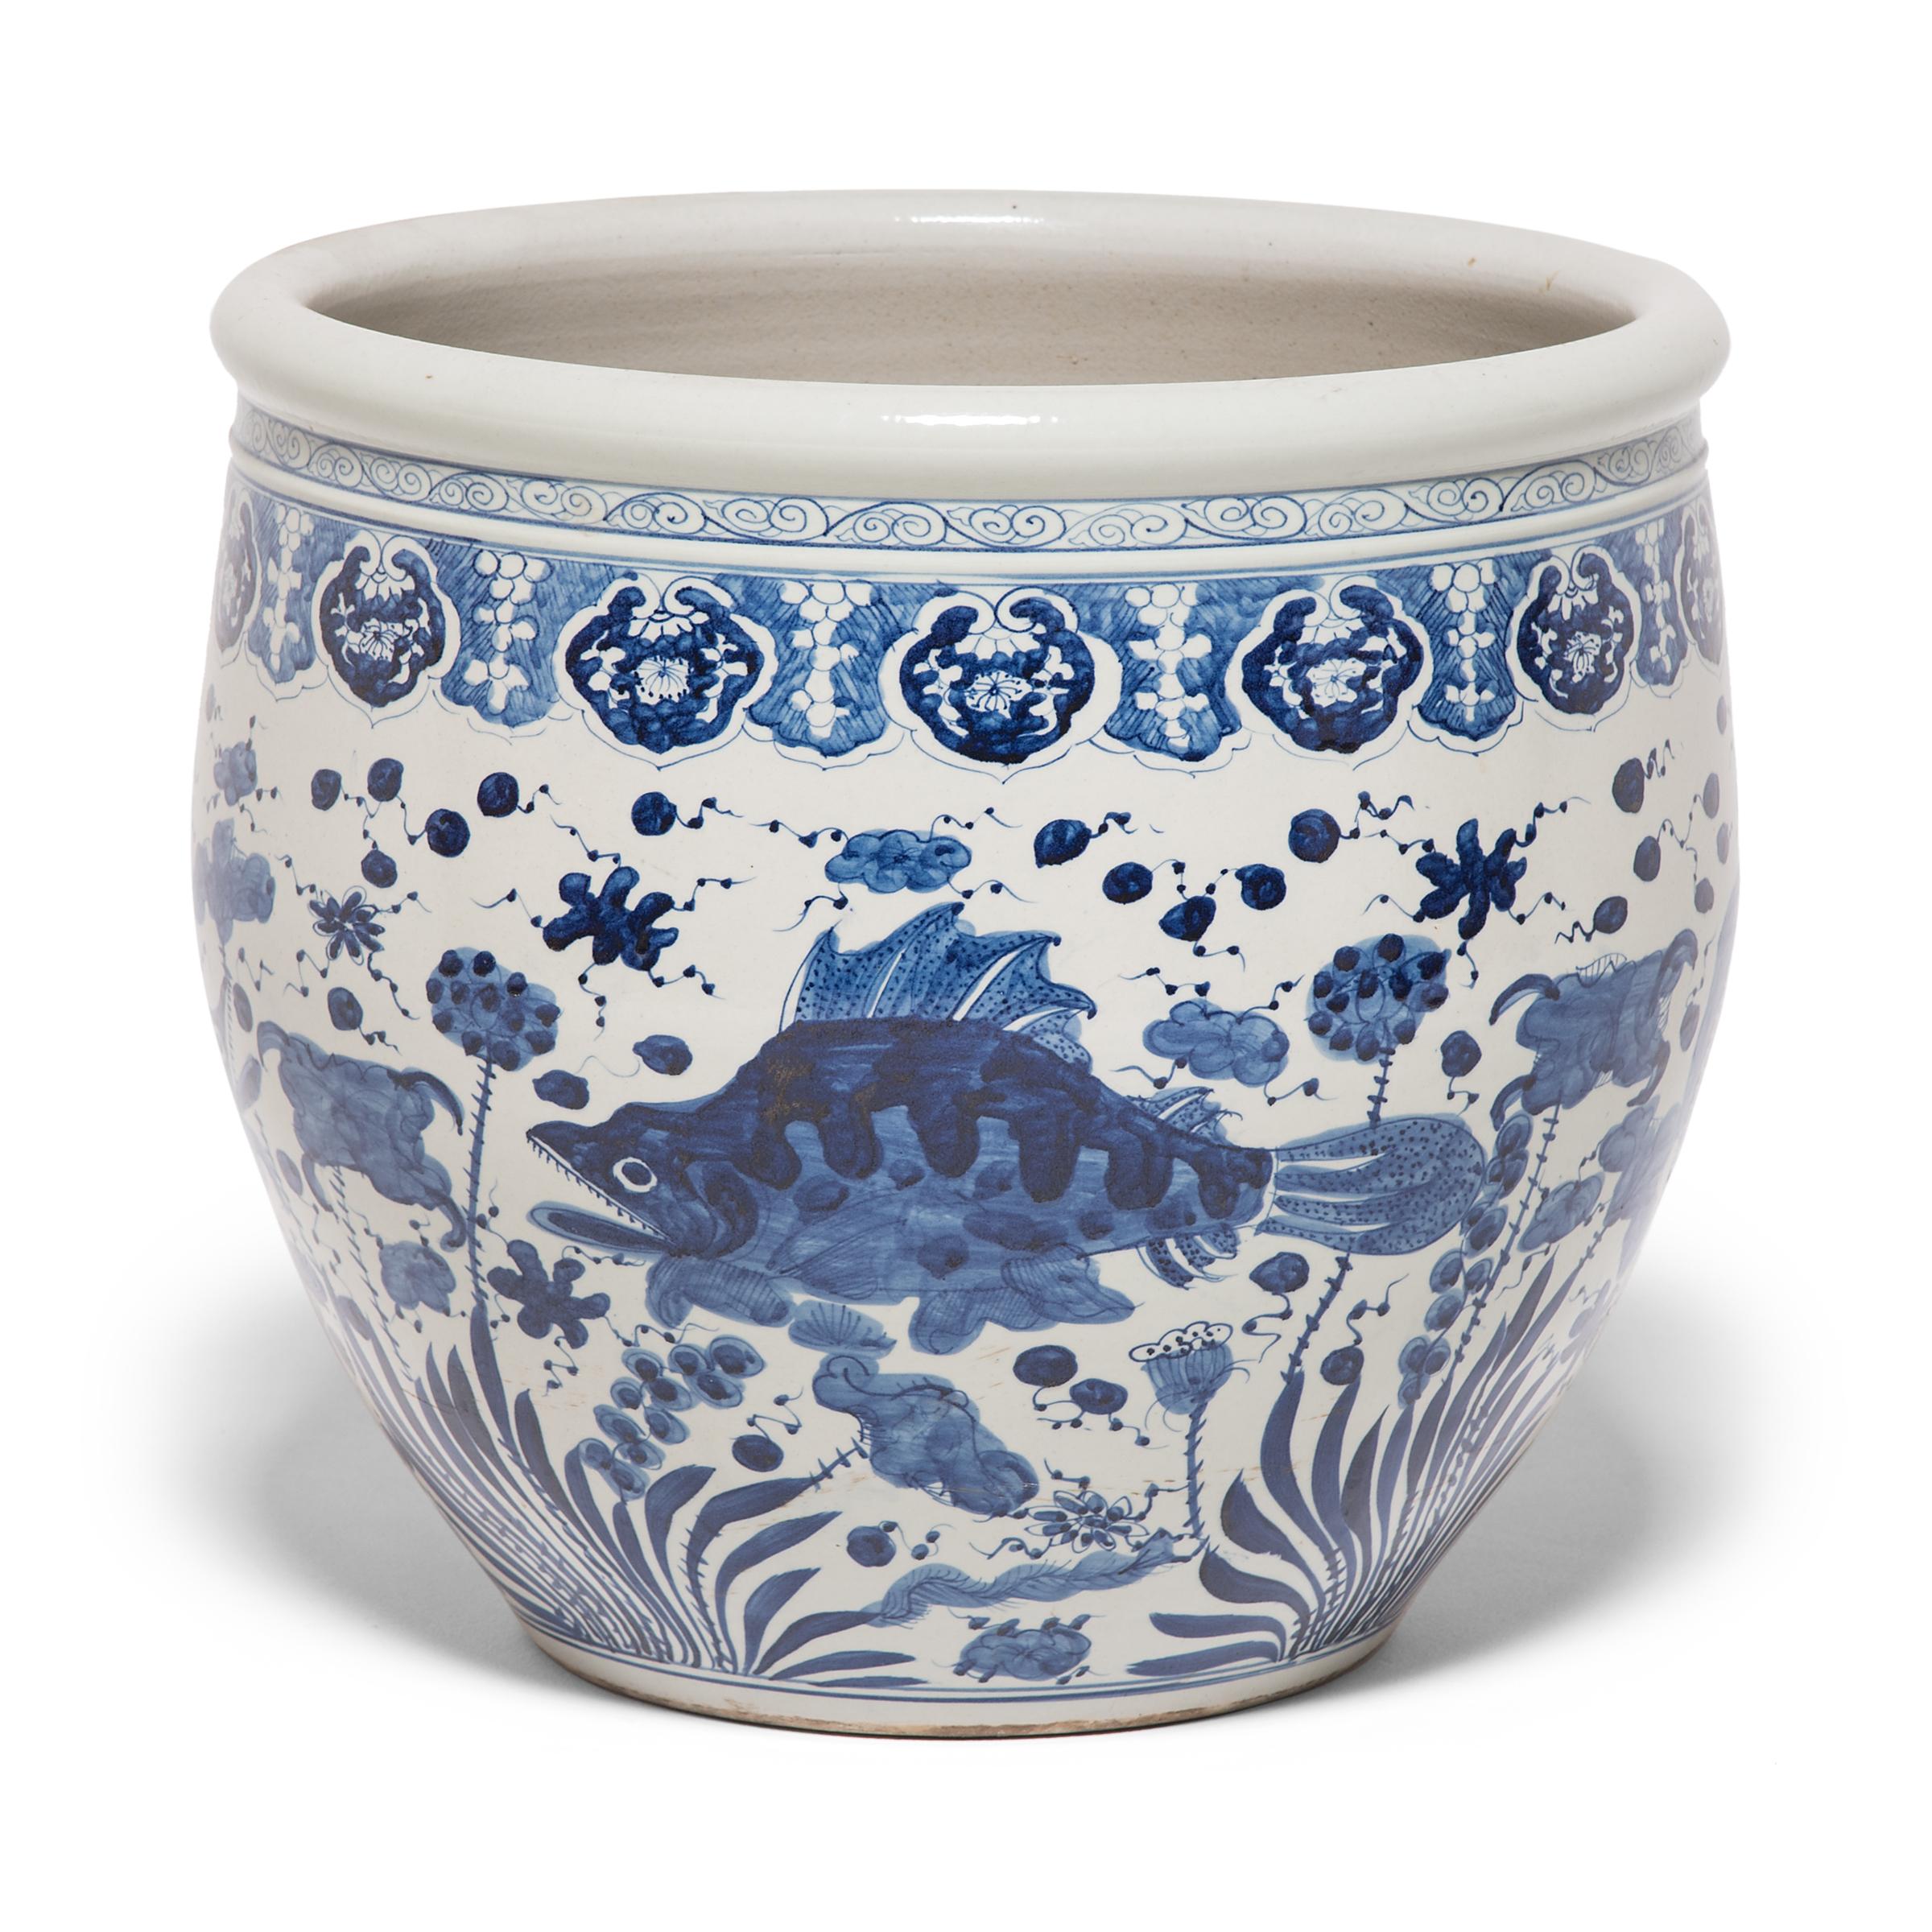 Glazed Chinese Blue and White Fish Bowl